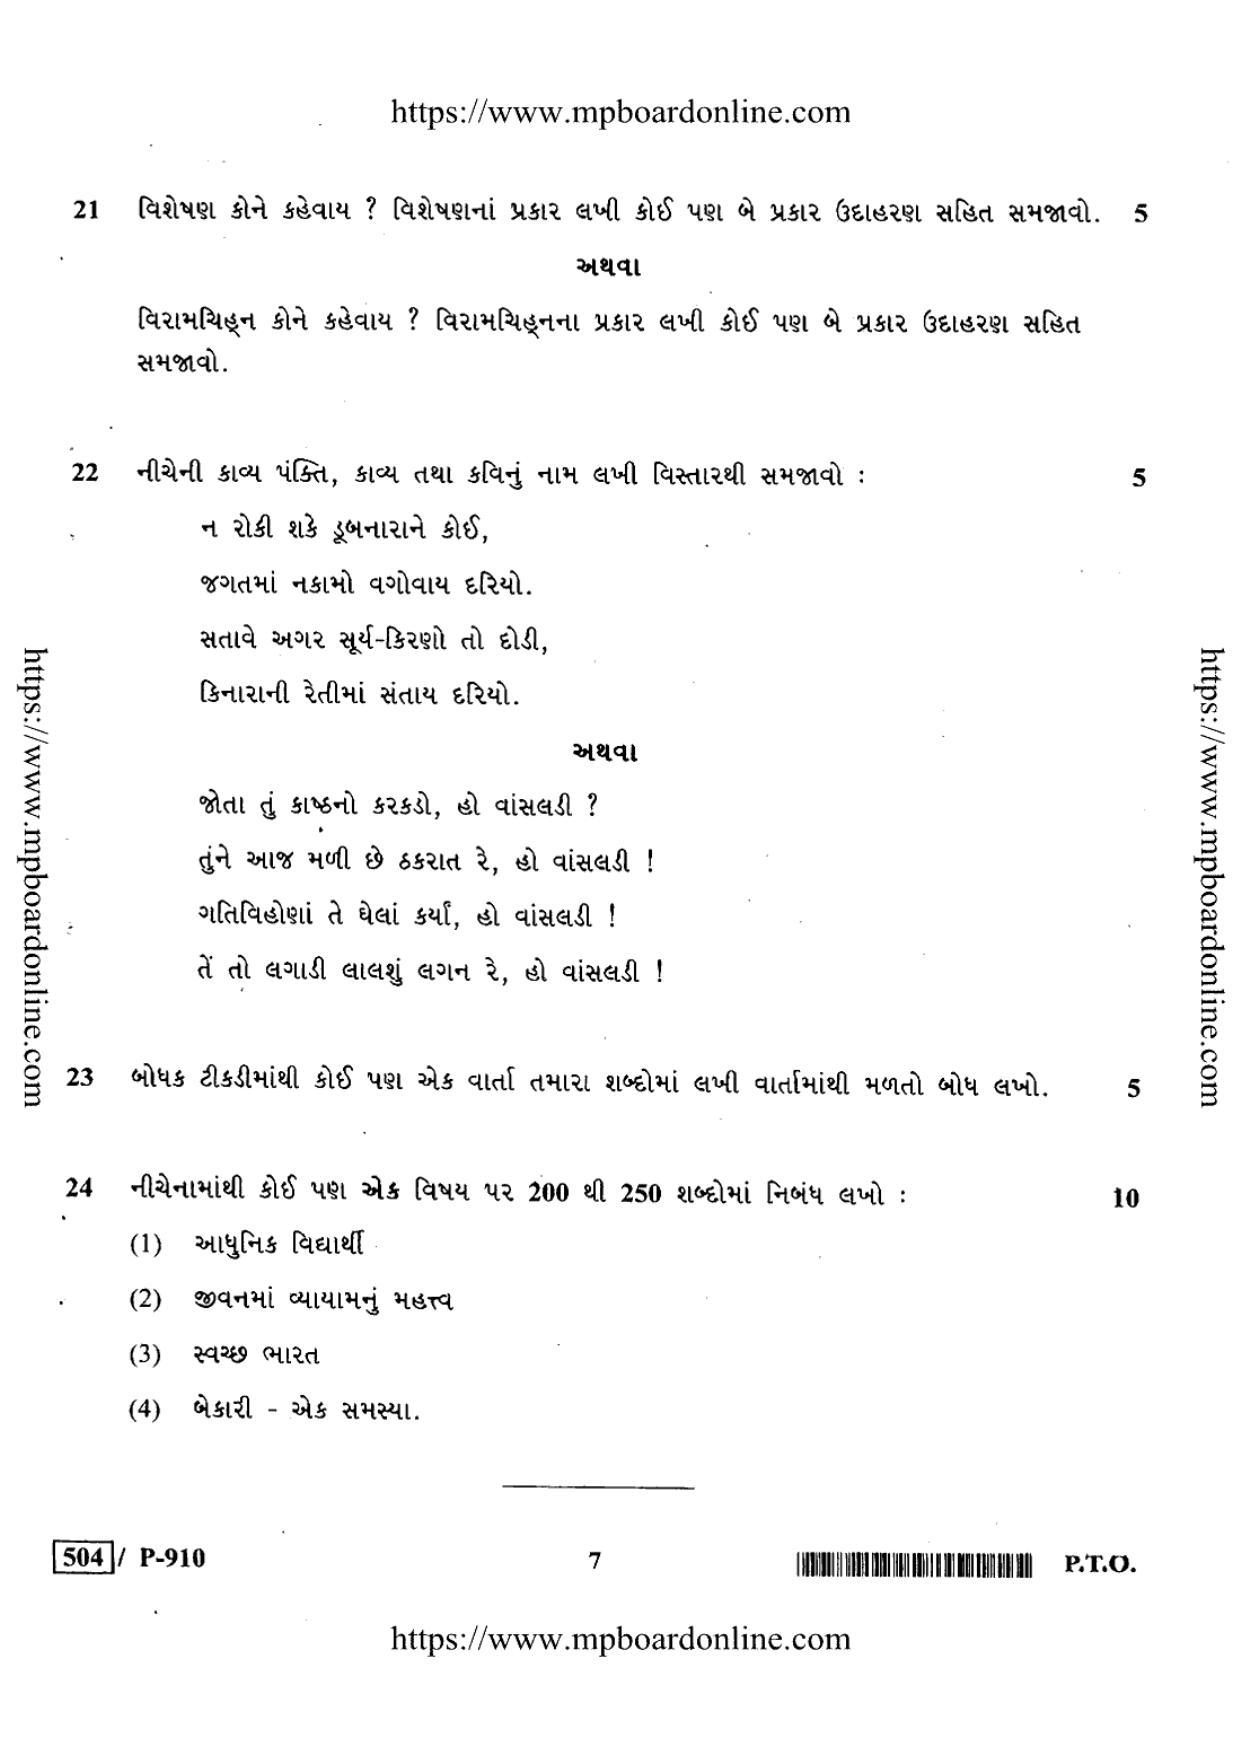 MP Board Class 10 Gujrat General 2020 Question Paper - Page 7